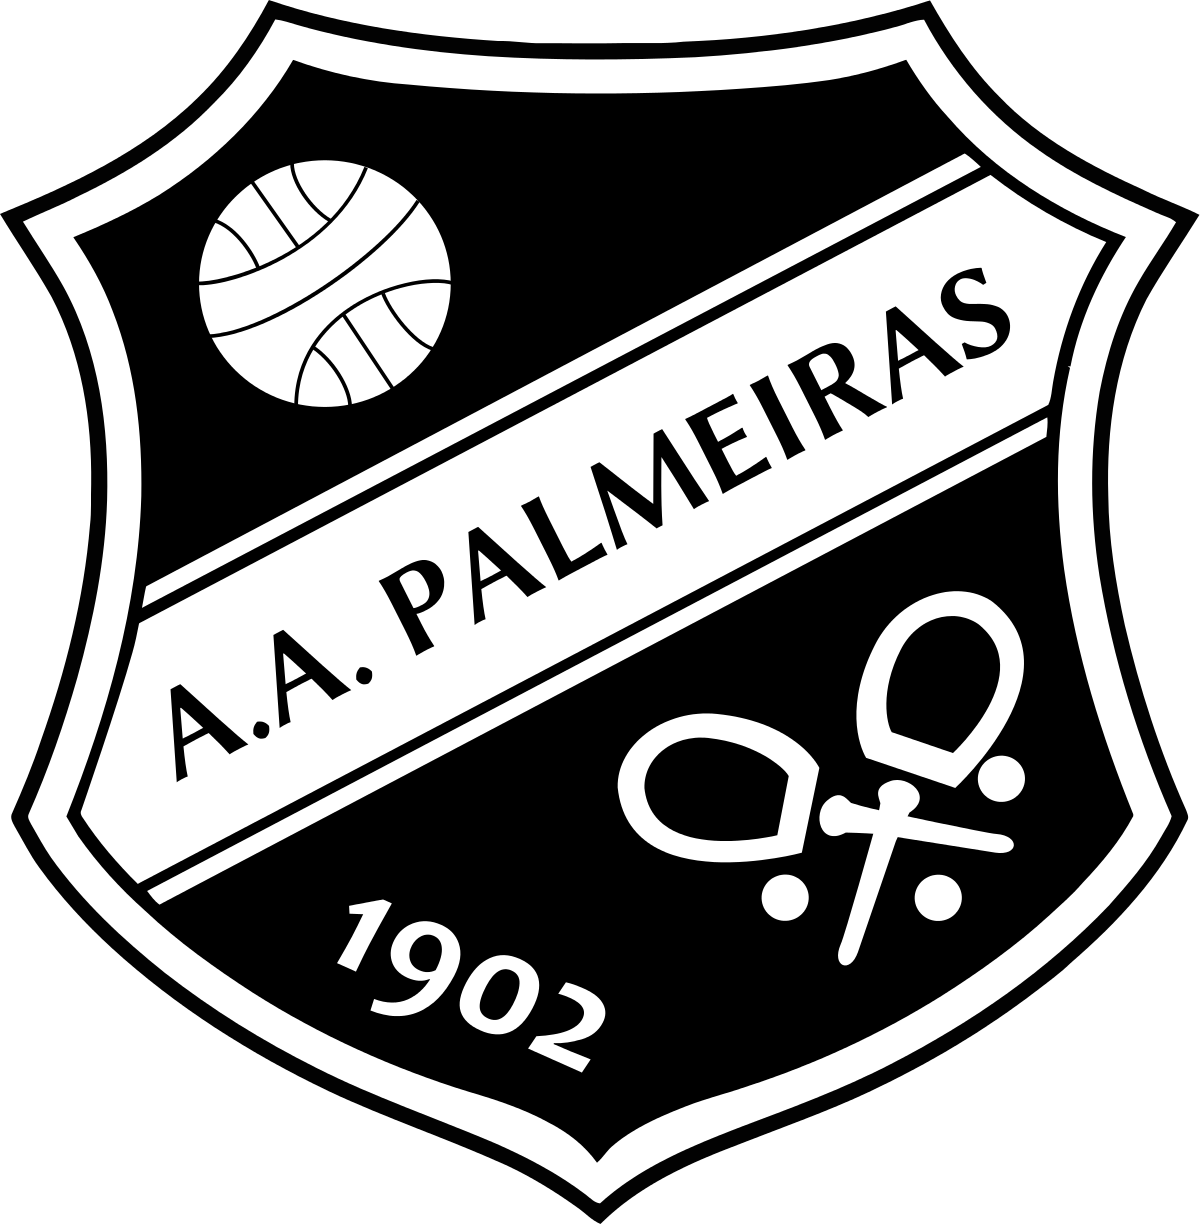 File:Palmeiras-sao-paulo-final-paulista-abr2022.png - Wikimedia Commons